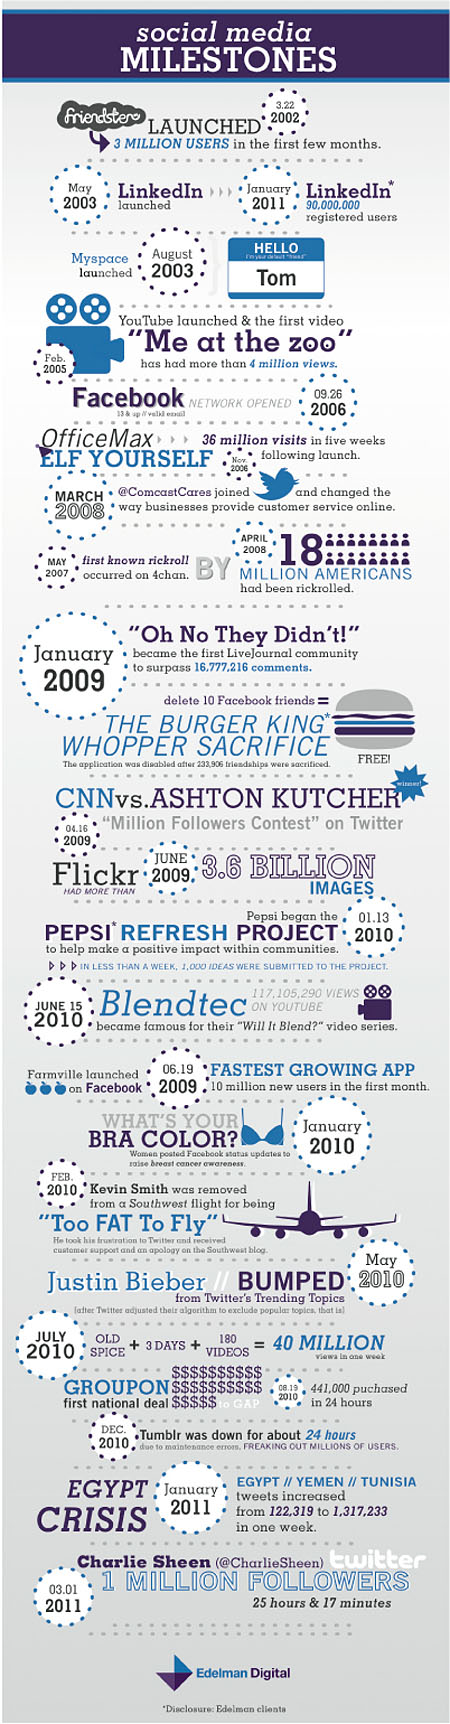 Social Media Milestones Infographic